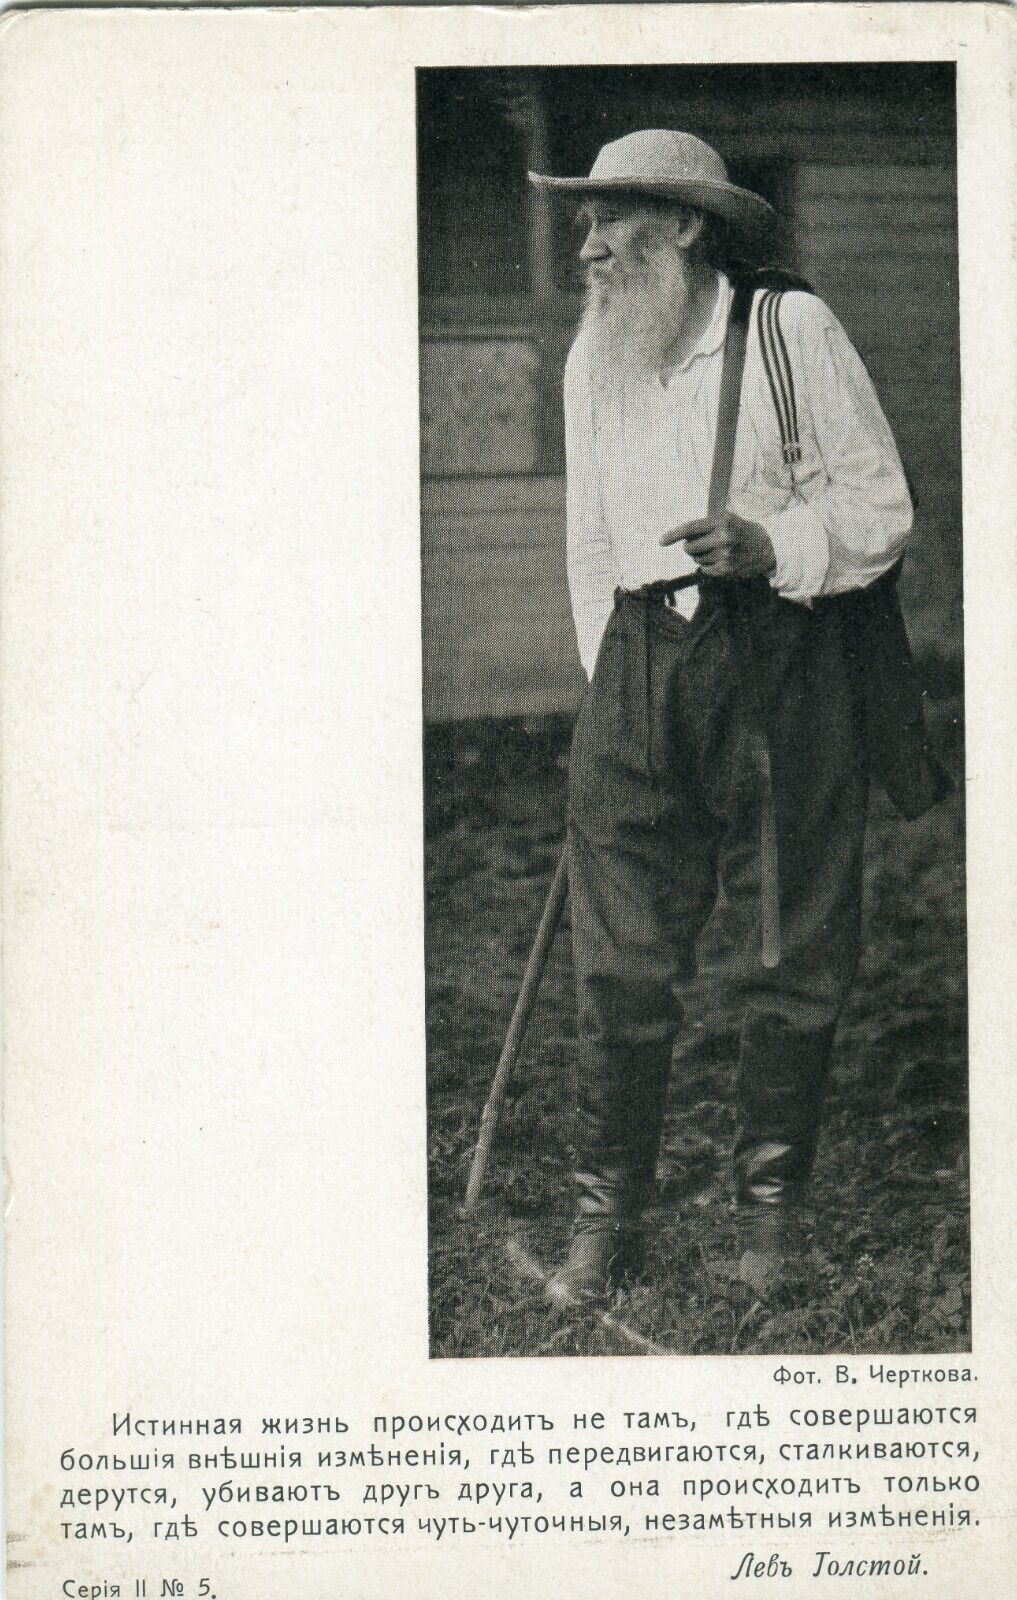 RRR Photo Leo Tolstoy by V. Chertkov, 1900s, Lifetime edition. Russian Empire.